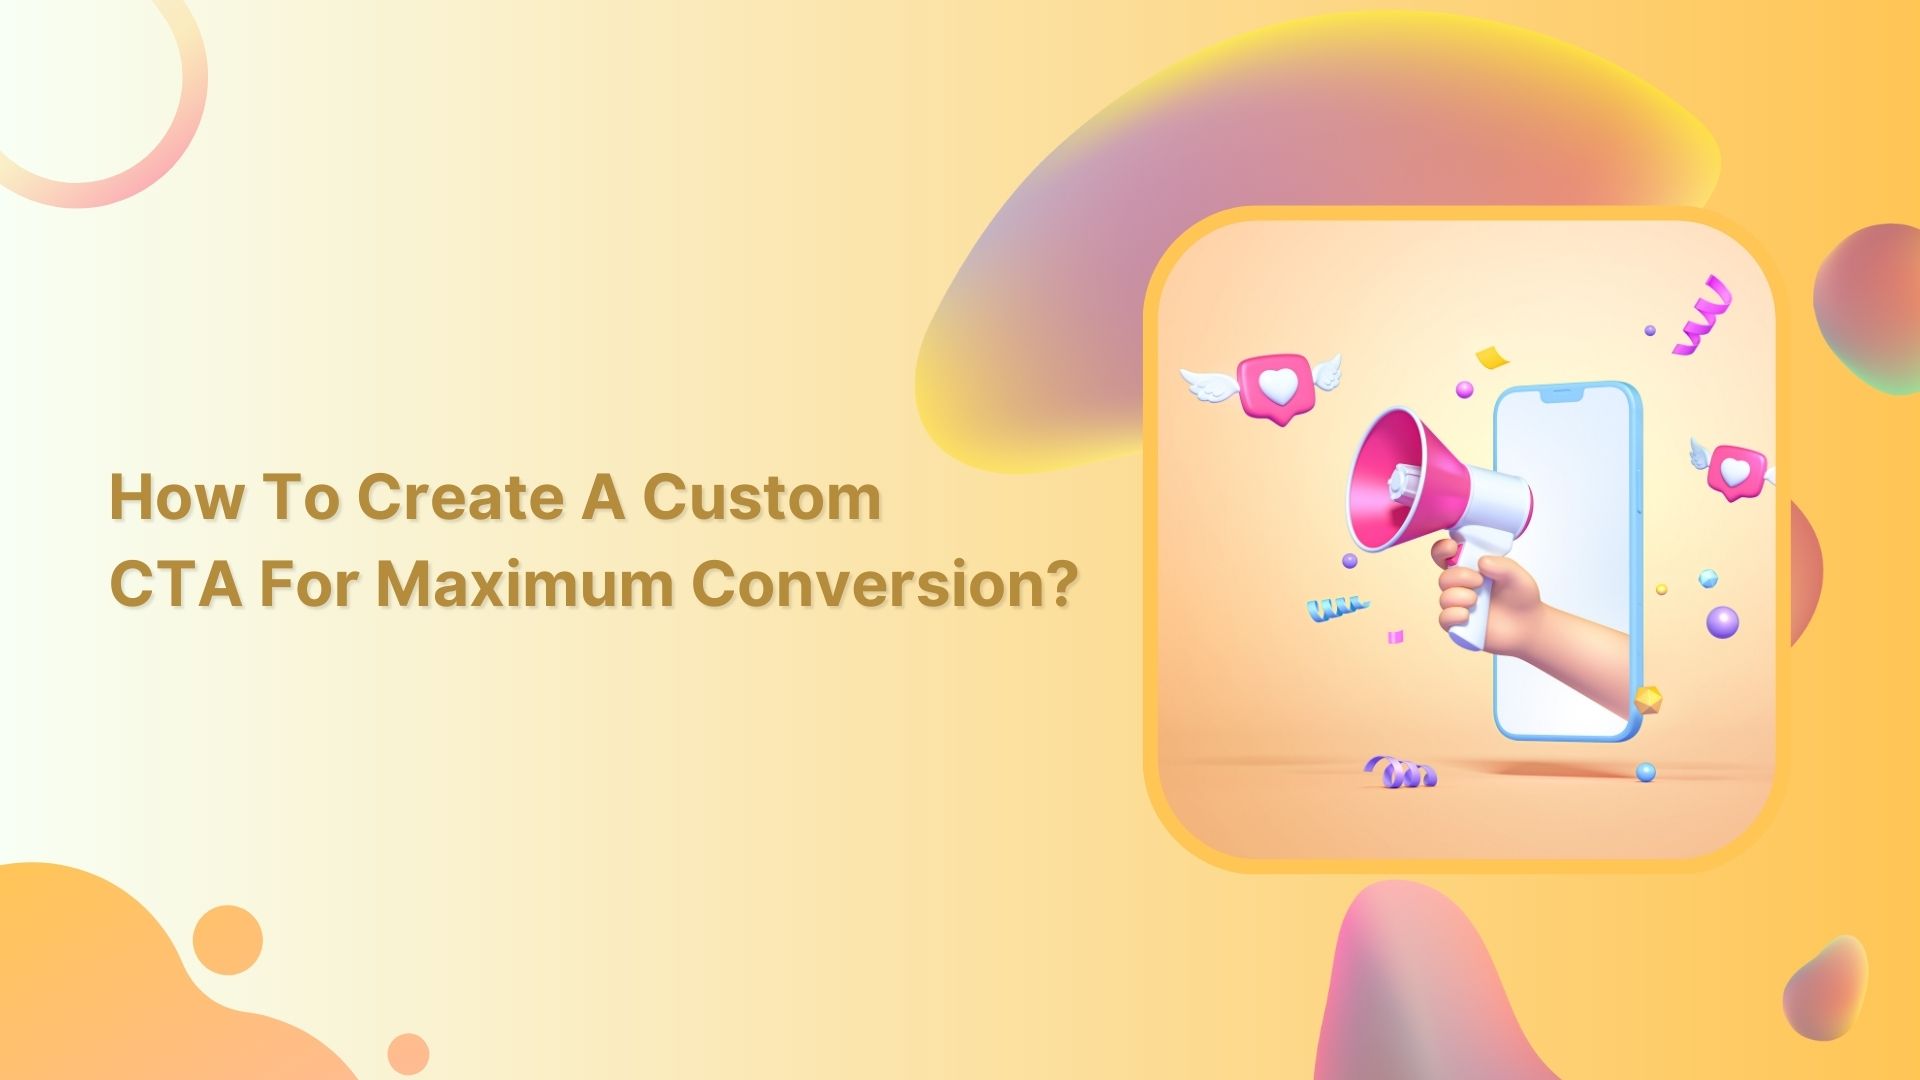  How to create a custom CTA for maximum conversion?